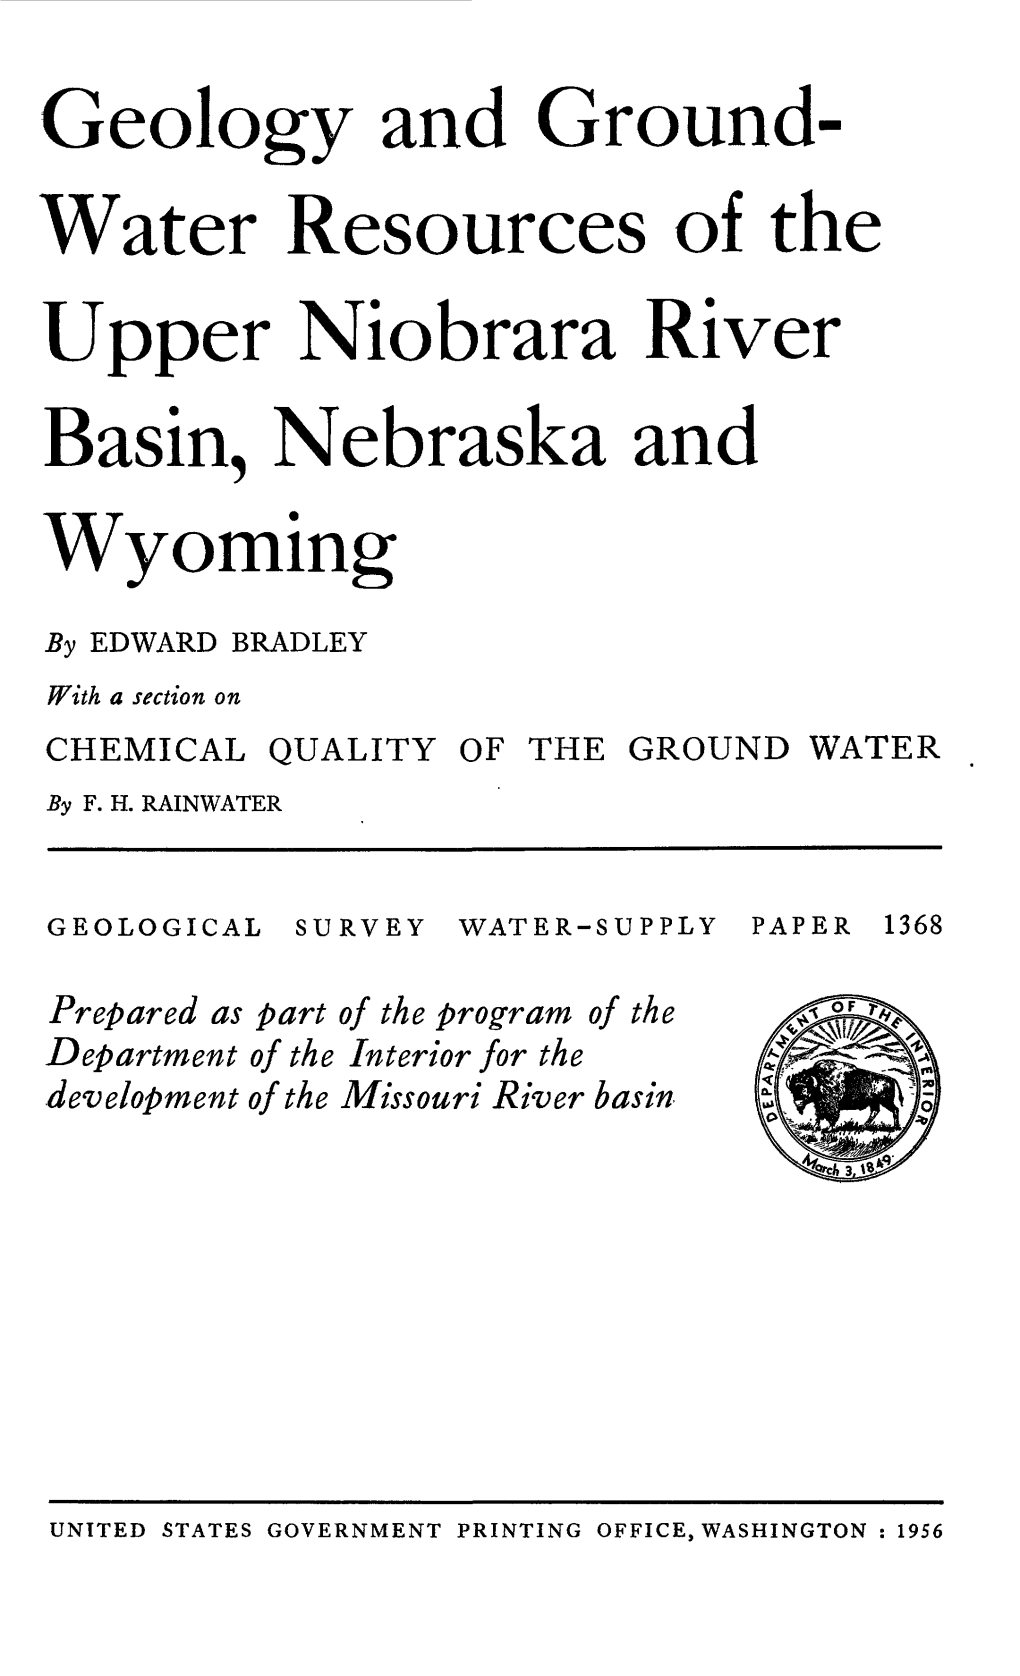 Water Resources of the Upper Niobrara River Basin, Nebraska and Wyoming